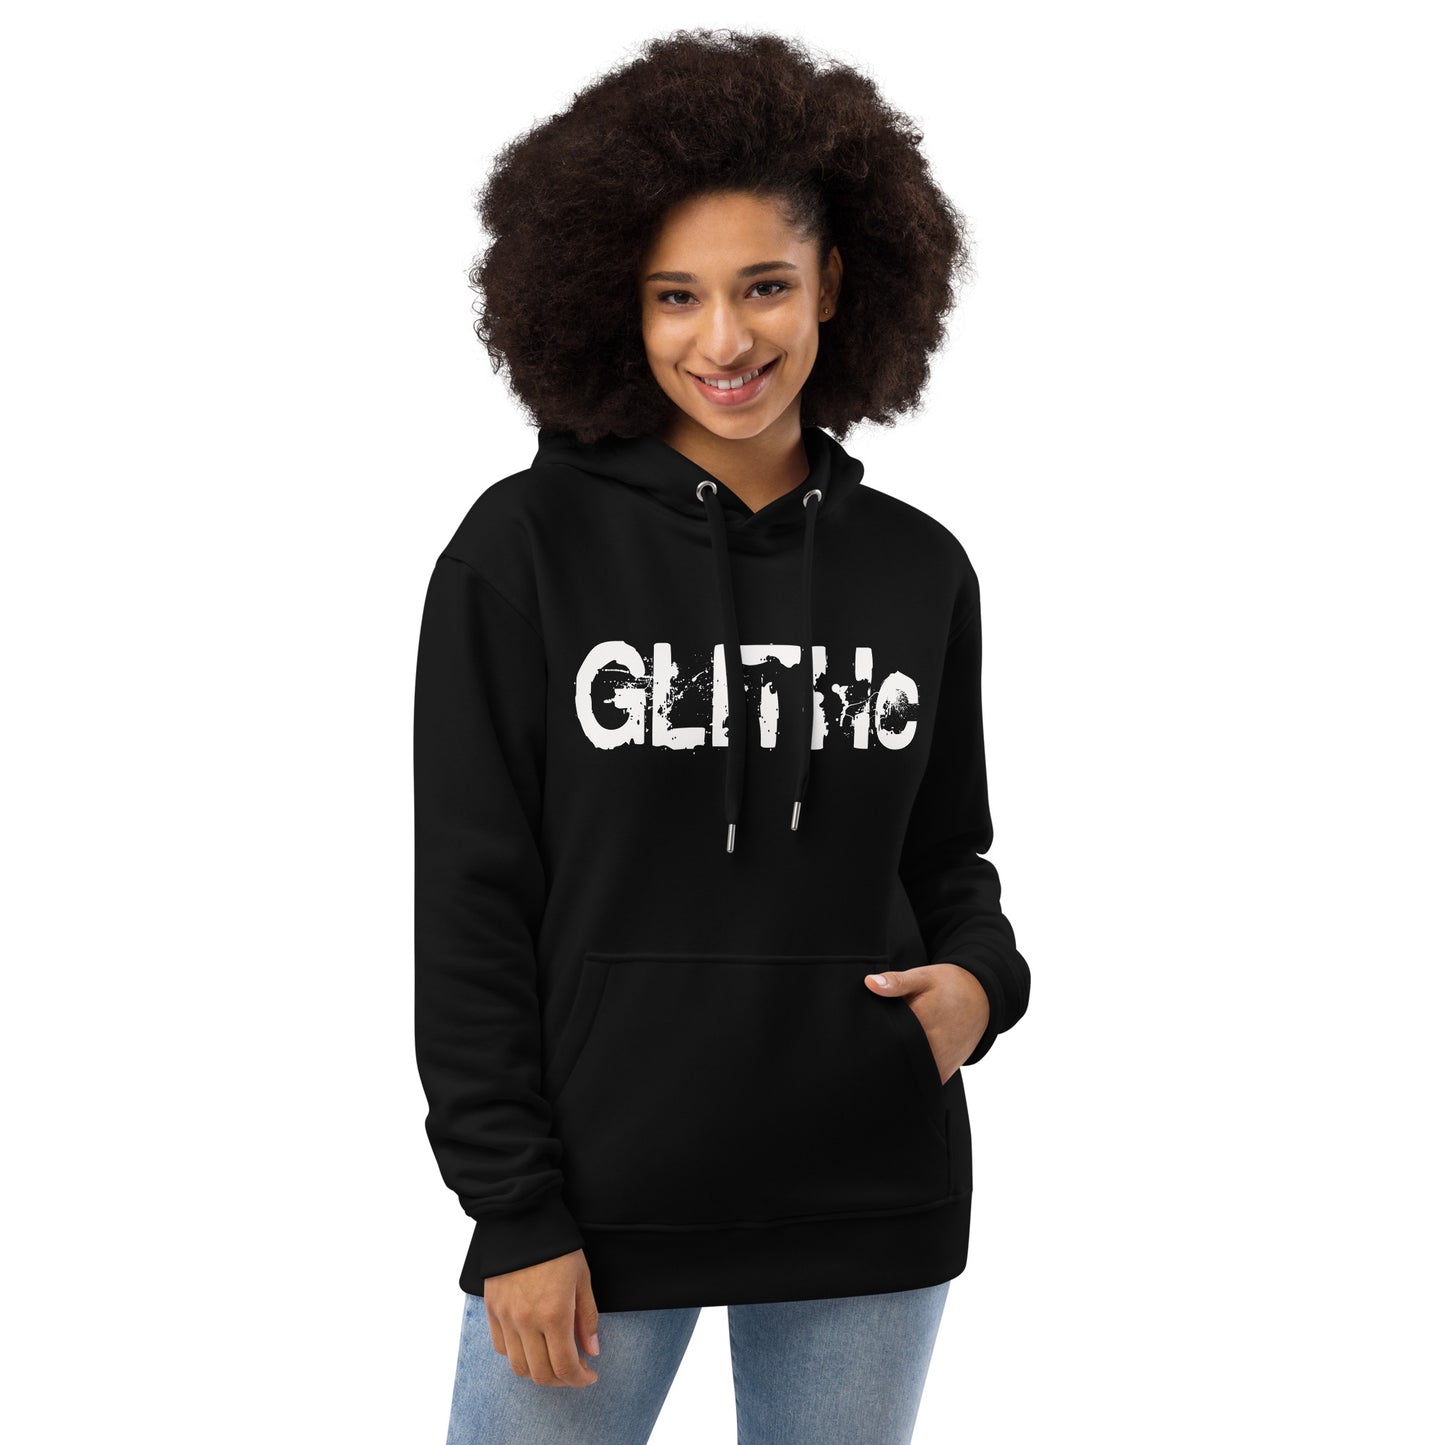 GLITHc Premium eco hoodie Skatewear / Clubwear / Stage outfit / Streetwear